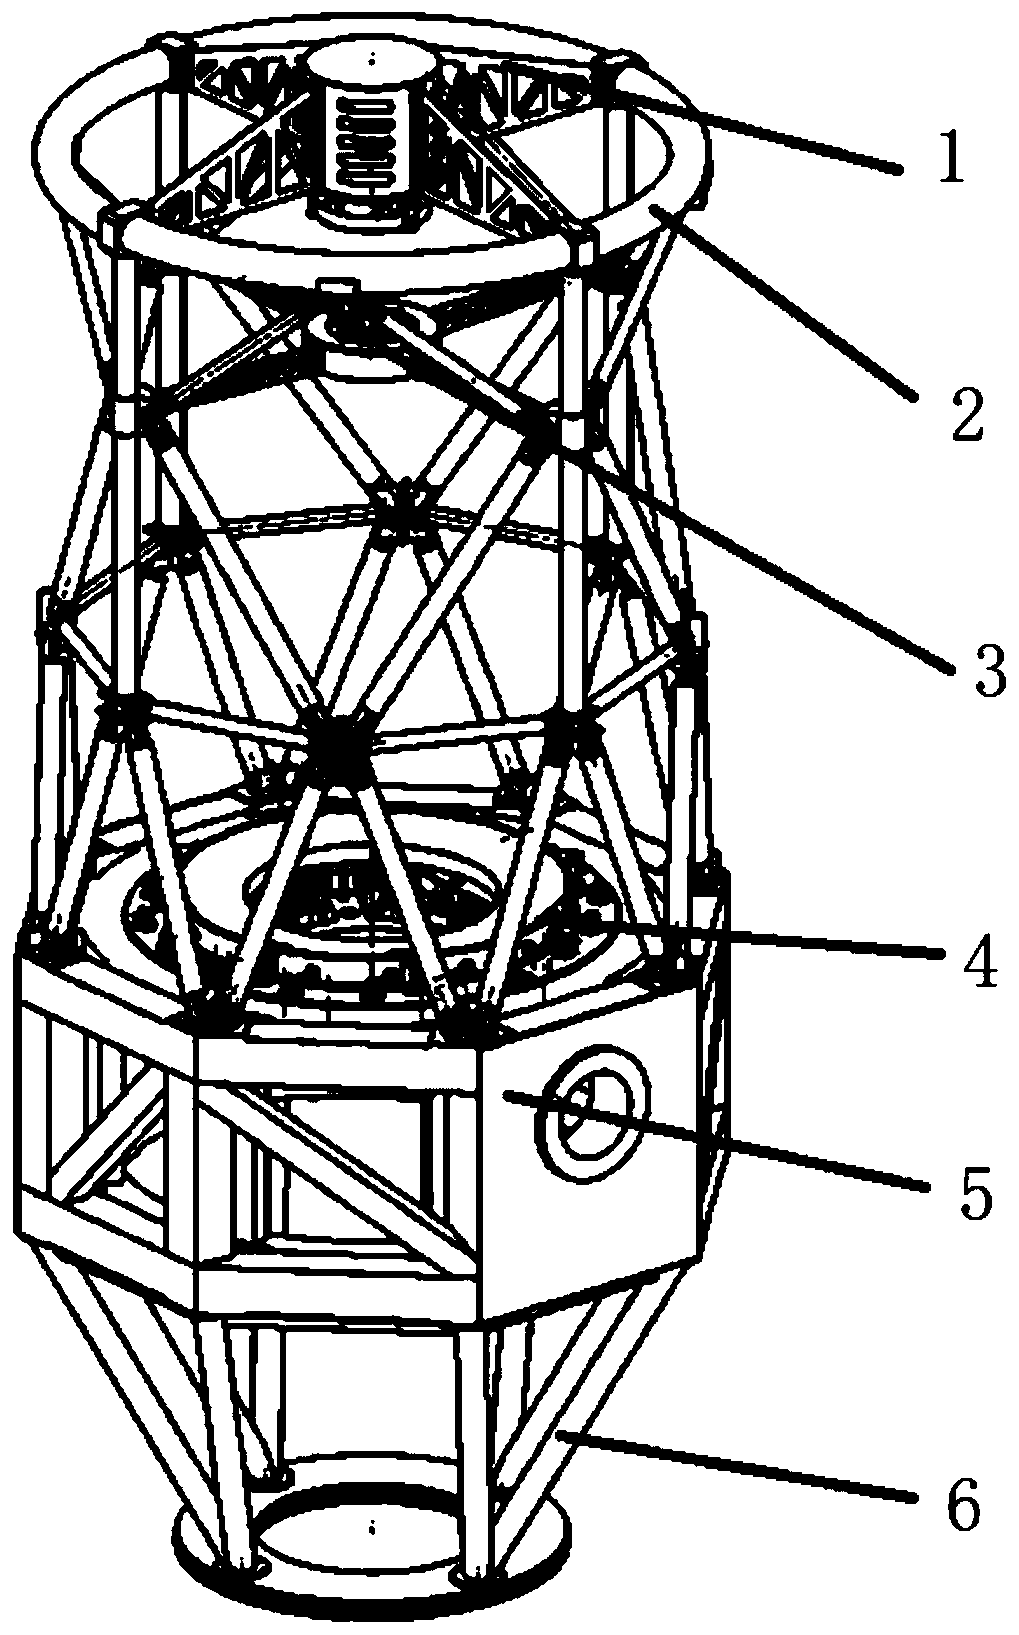 Lens cone structure of large-aperture solar telescope